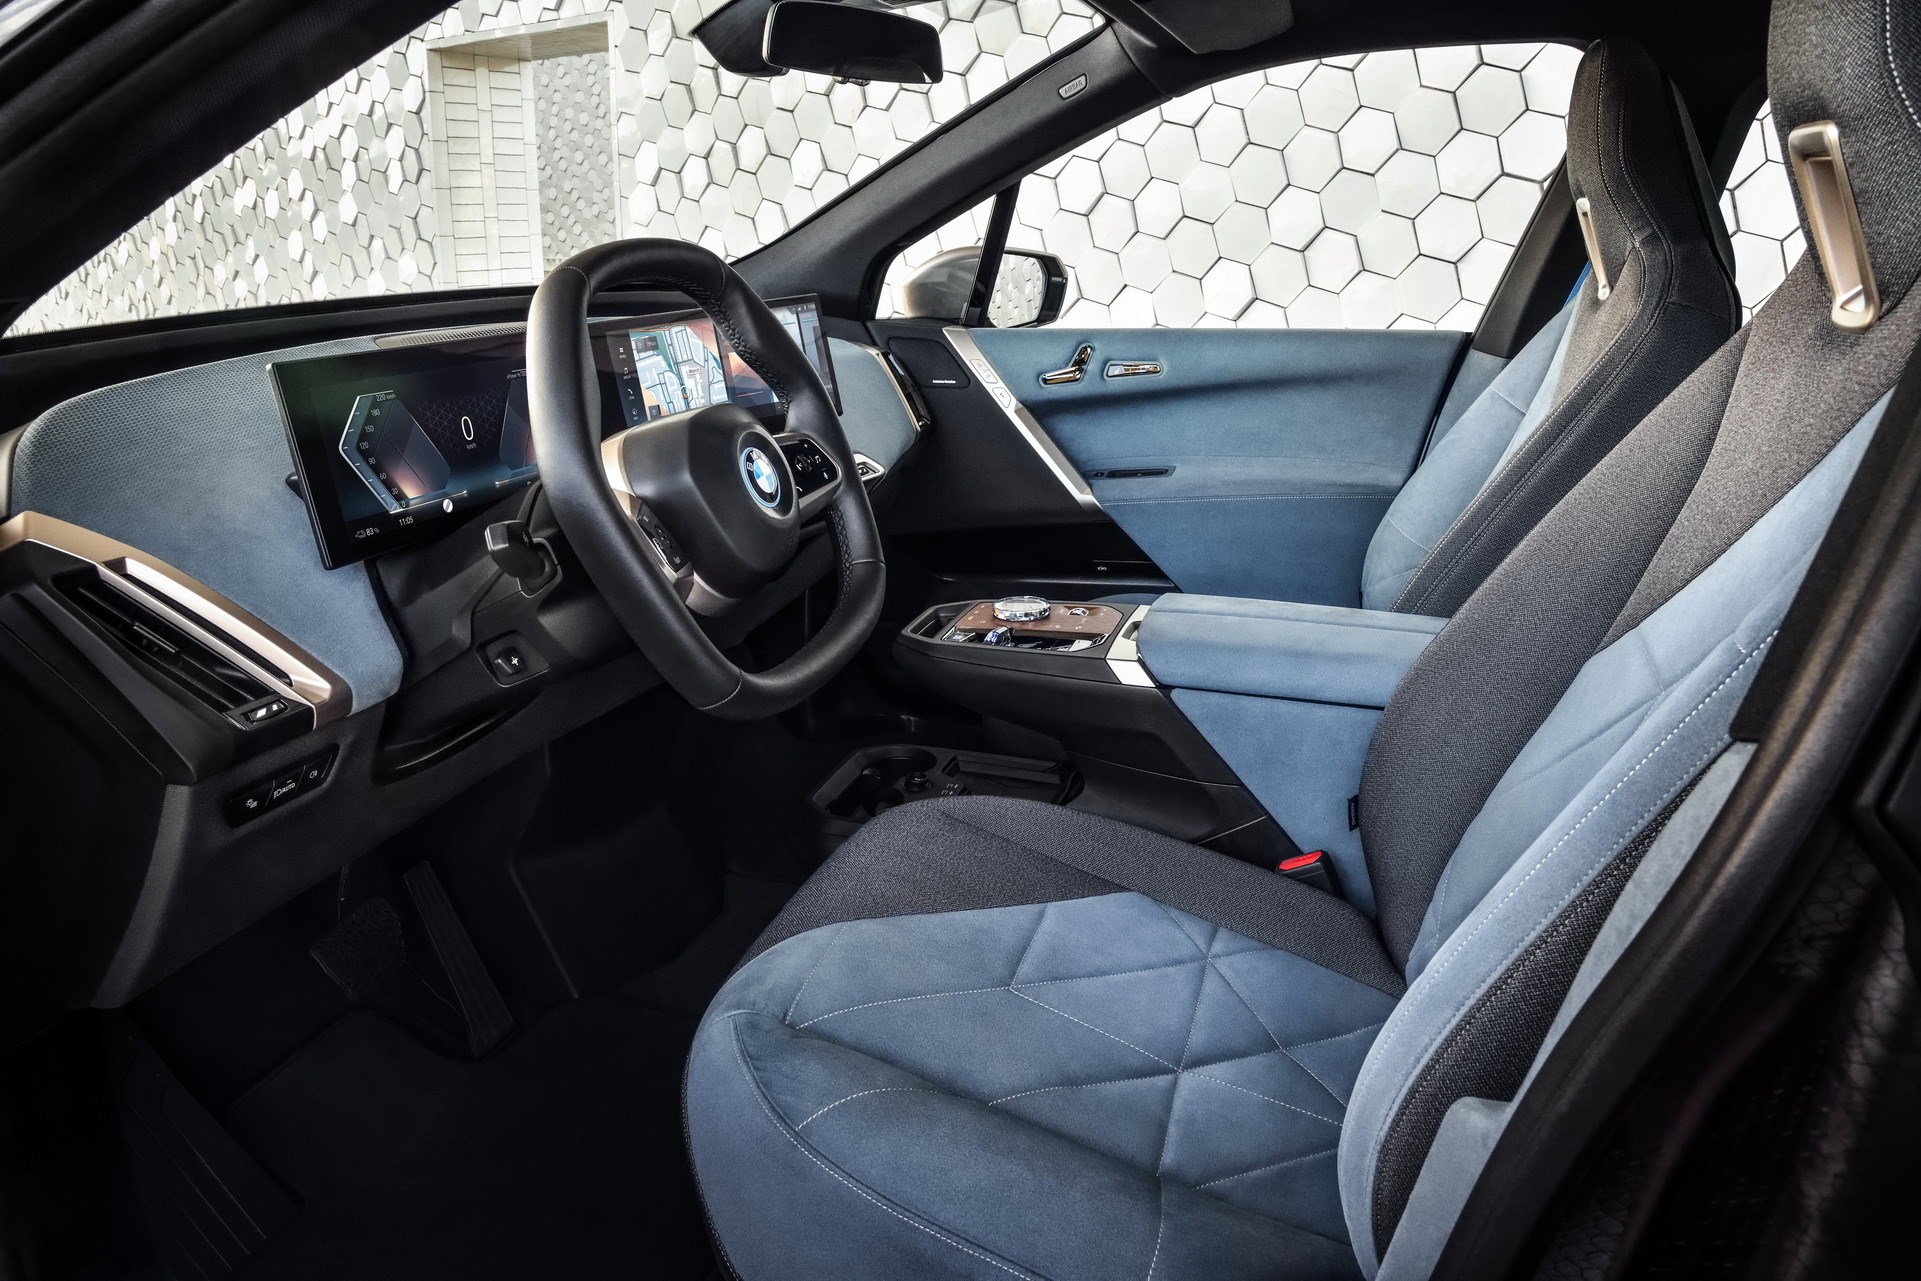 BMW, yeni elektrikli SUV modeli iX'i tanıttı